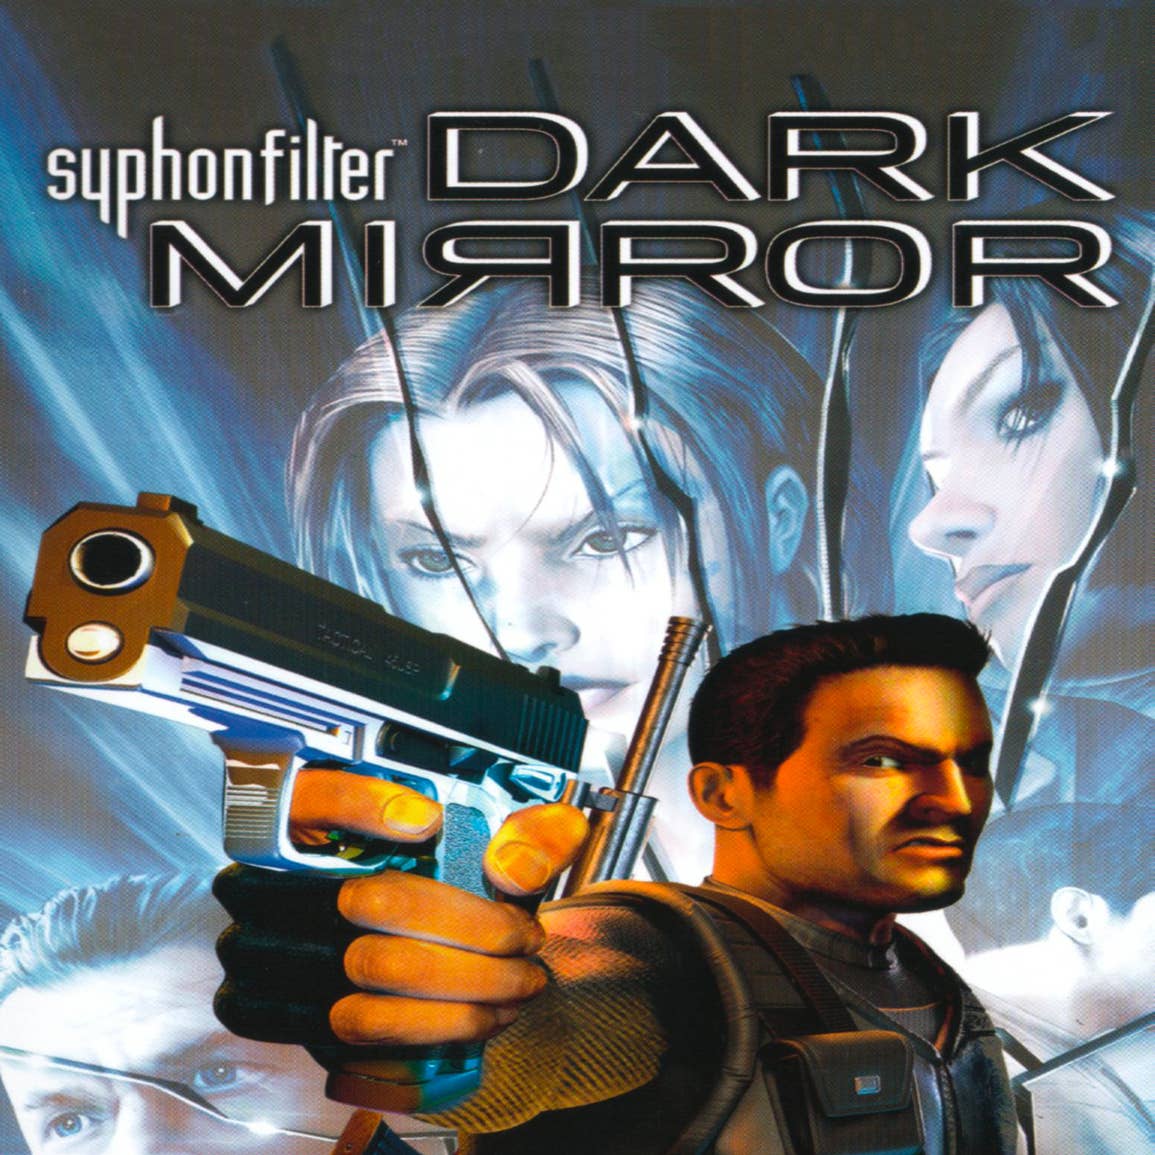 Syphon Filter: Dark Mirror  (PS2) Gameplay 